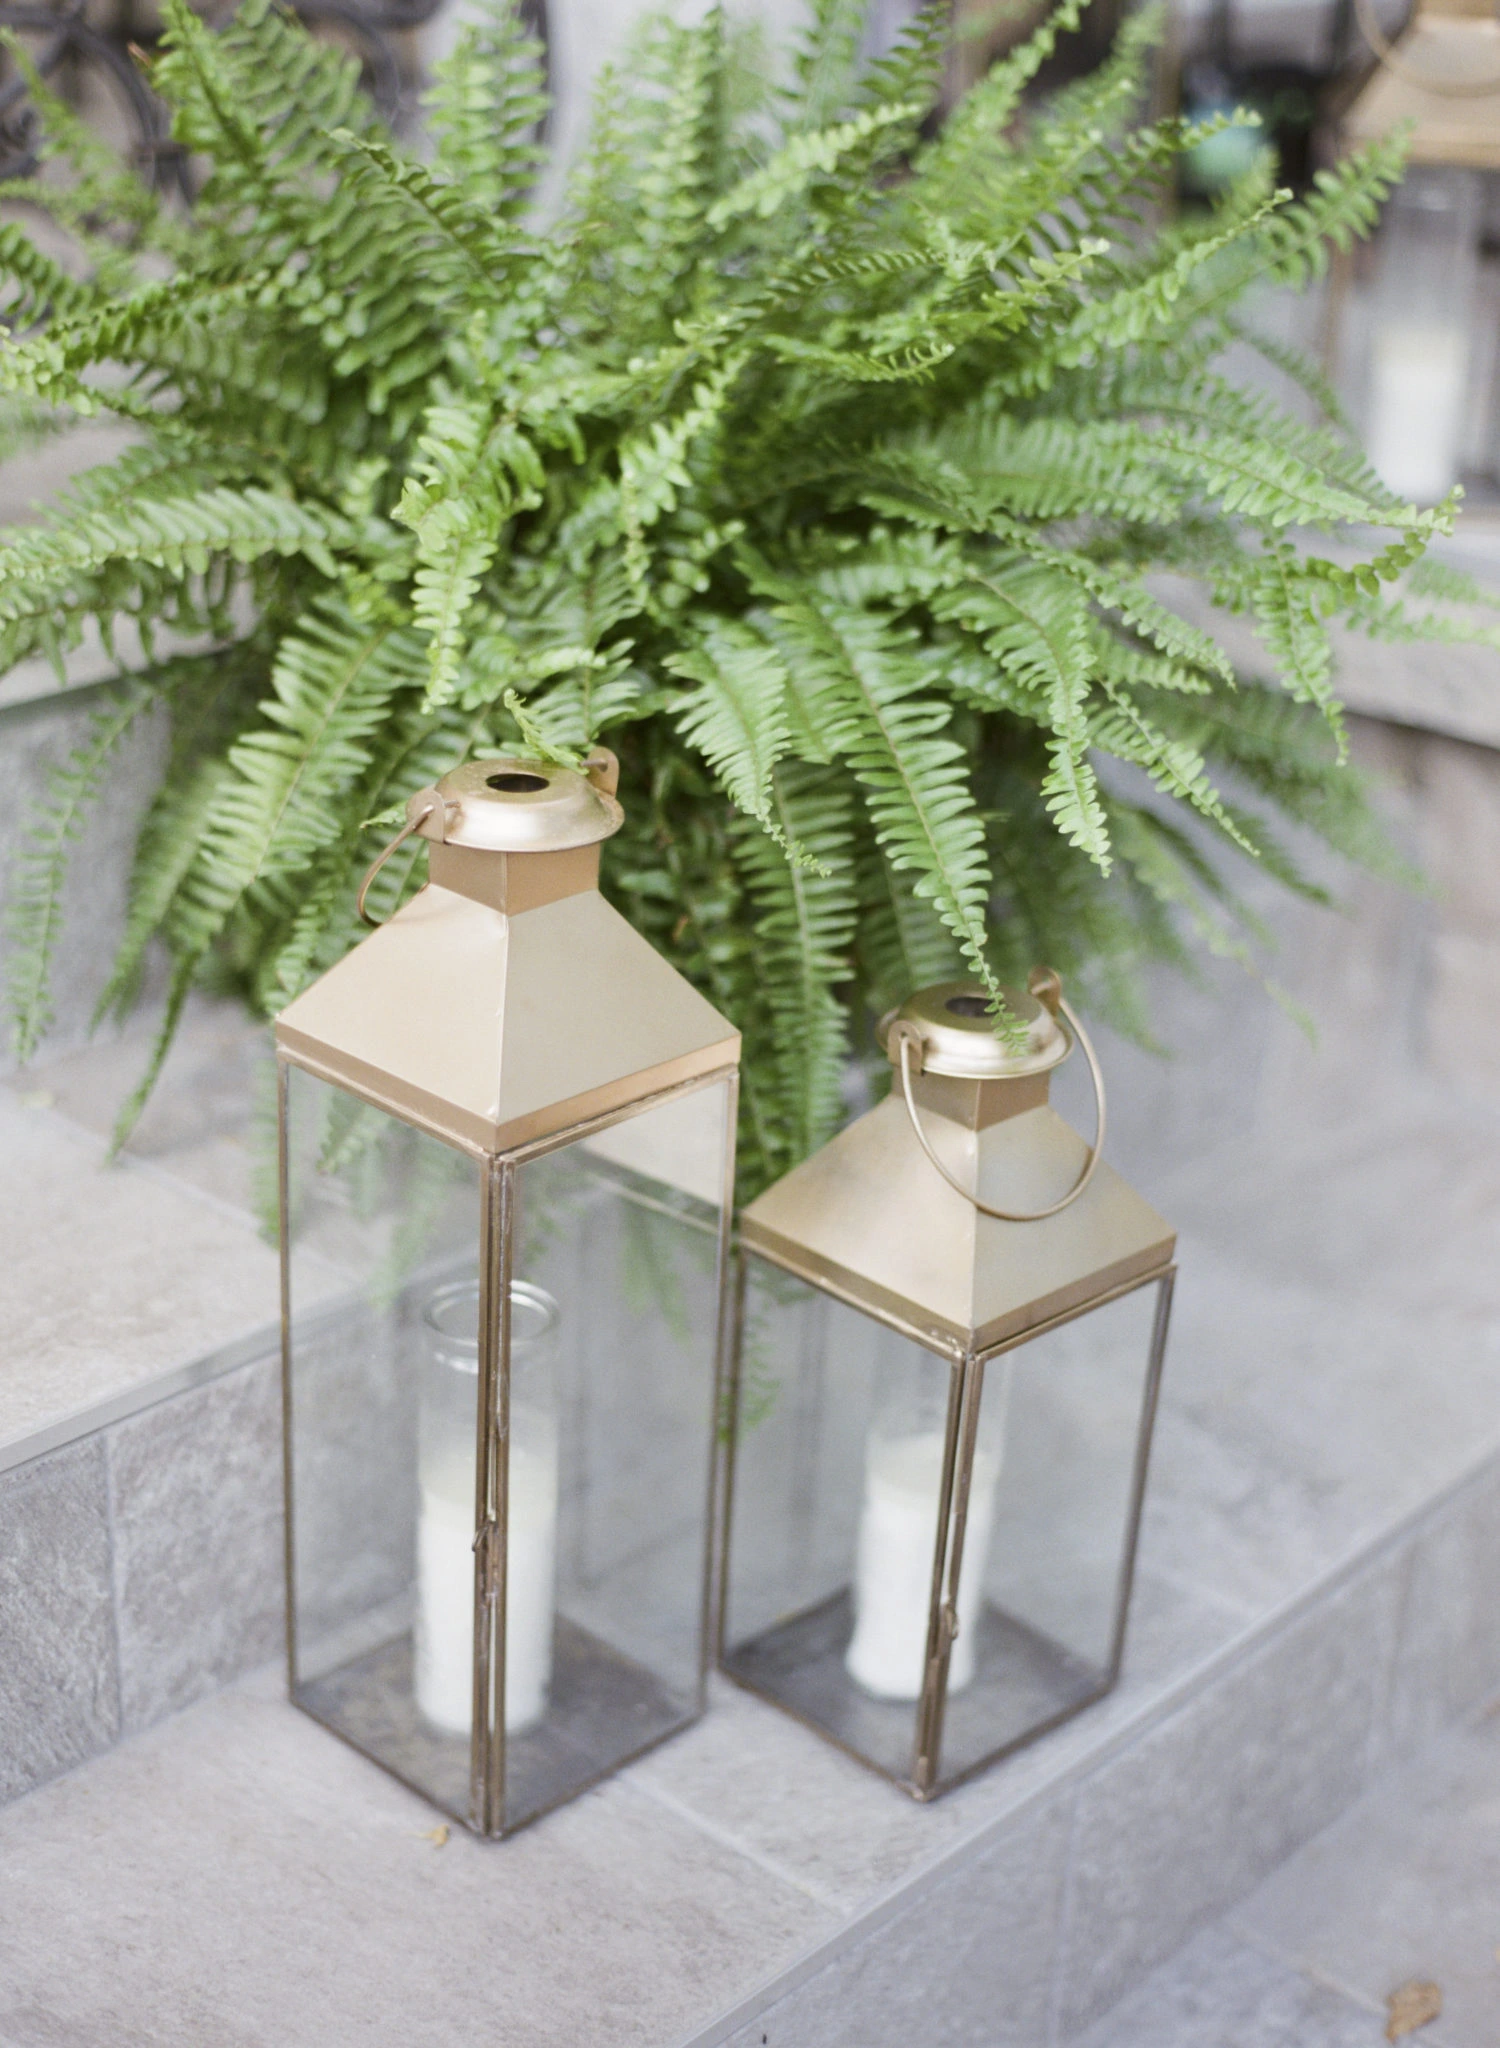 wedding lanterns with gold details next to a lush fern for garden wedding decor